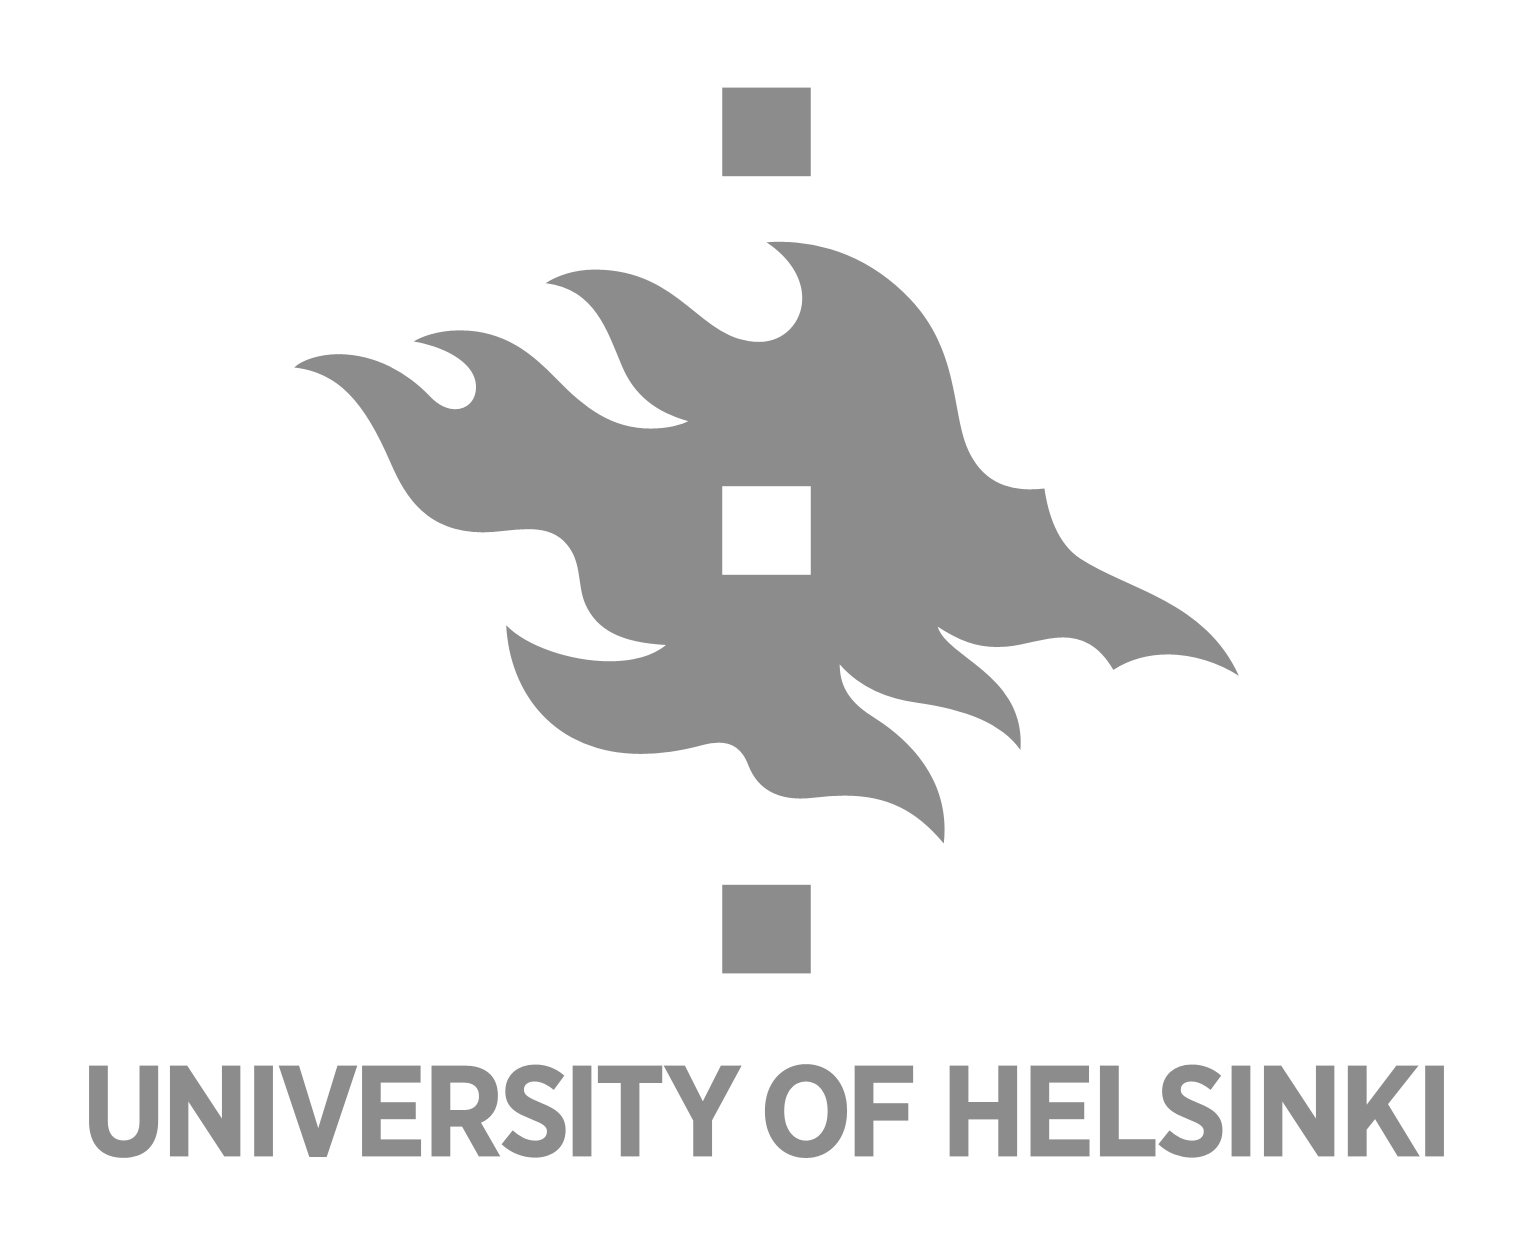 logo Helsinki